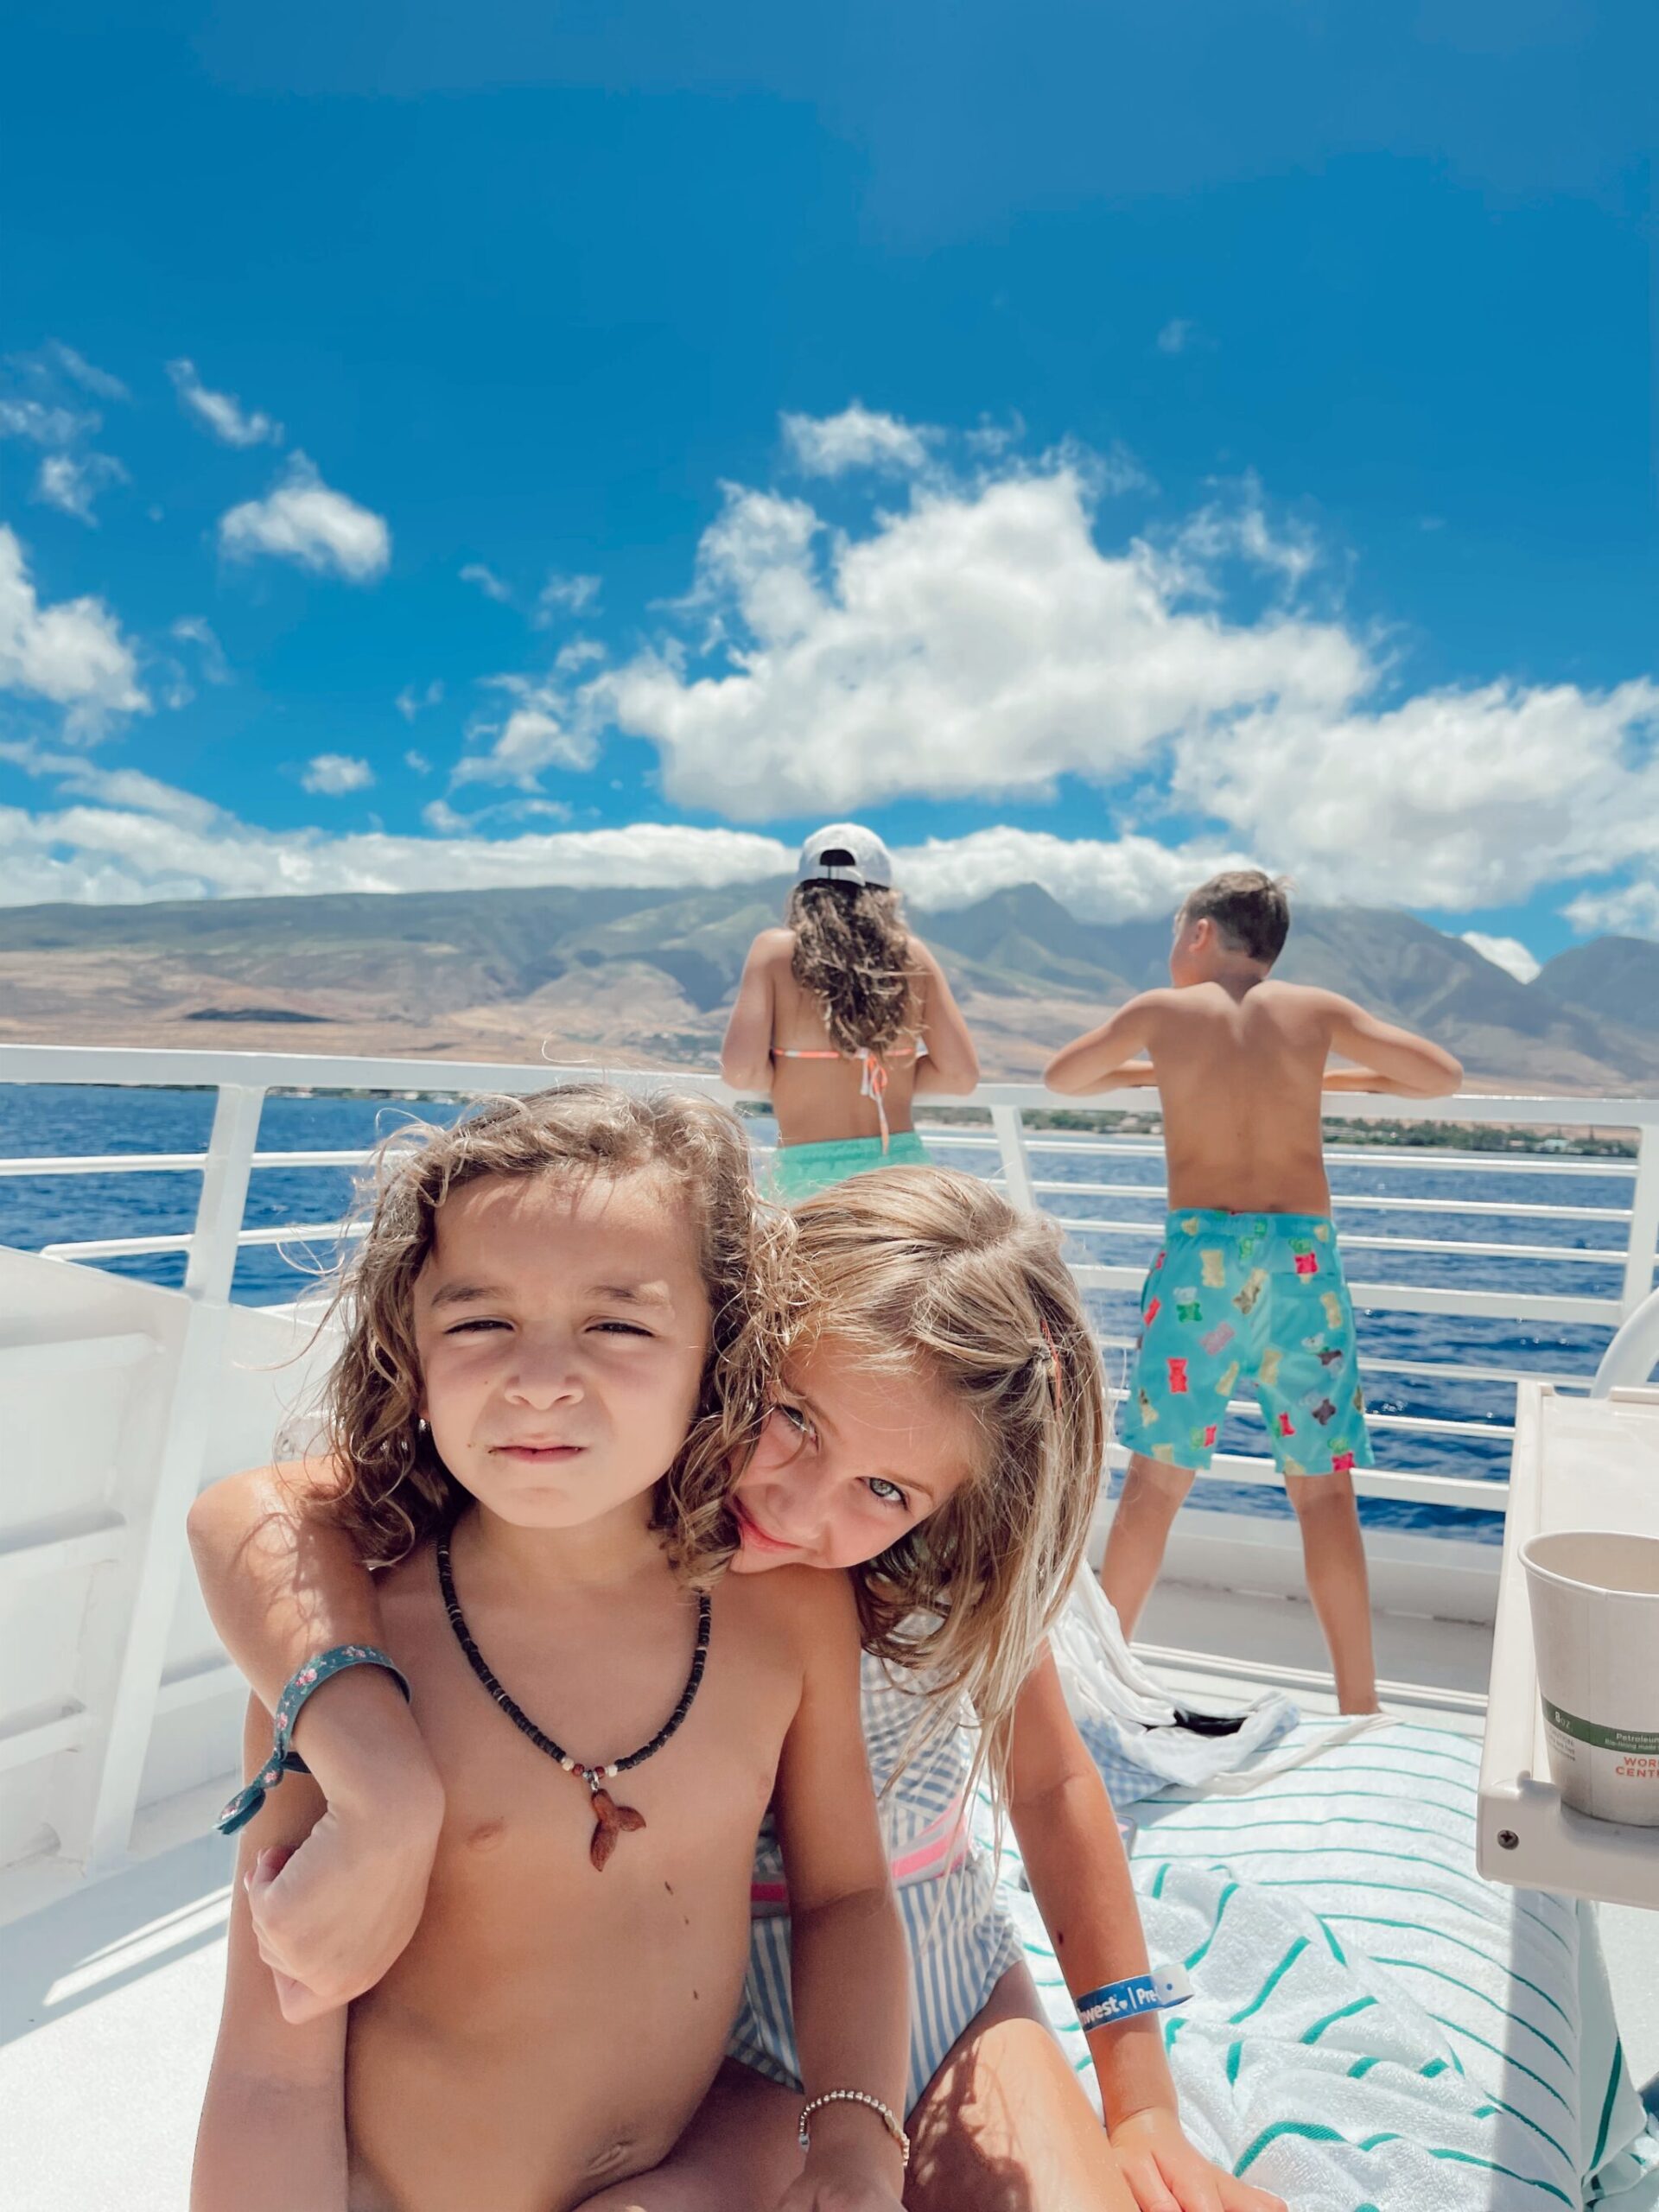 kids on a boat